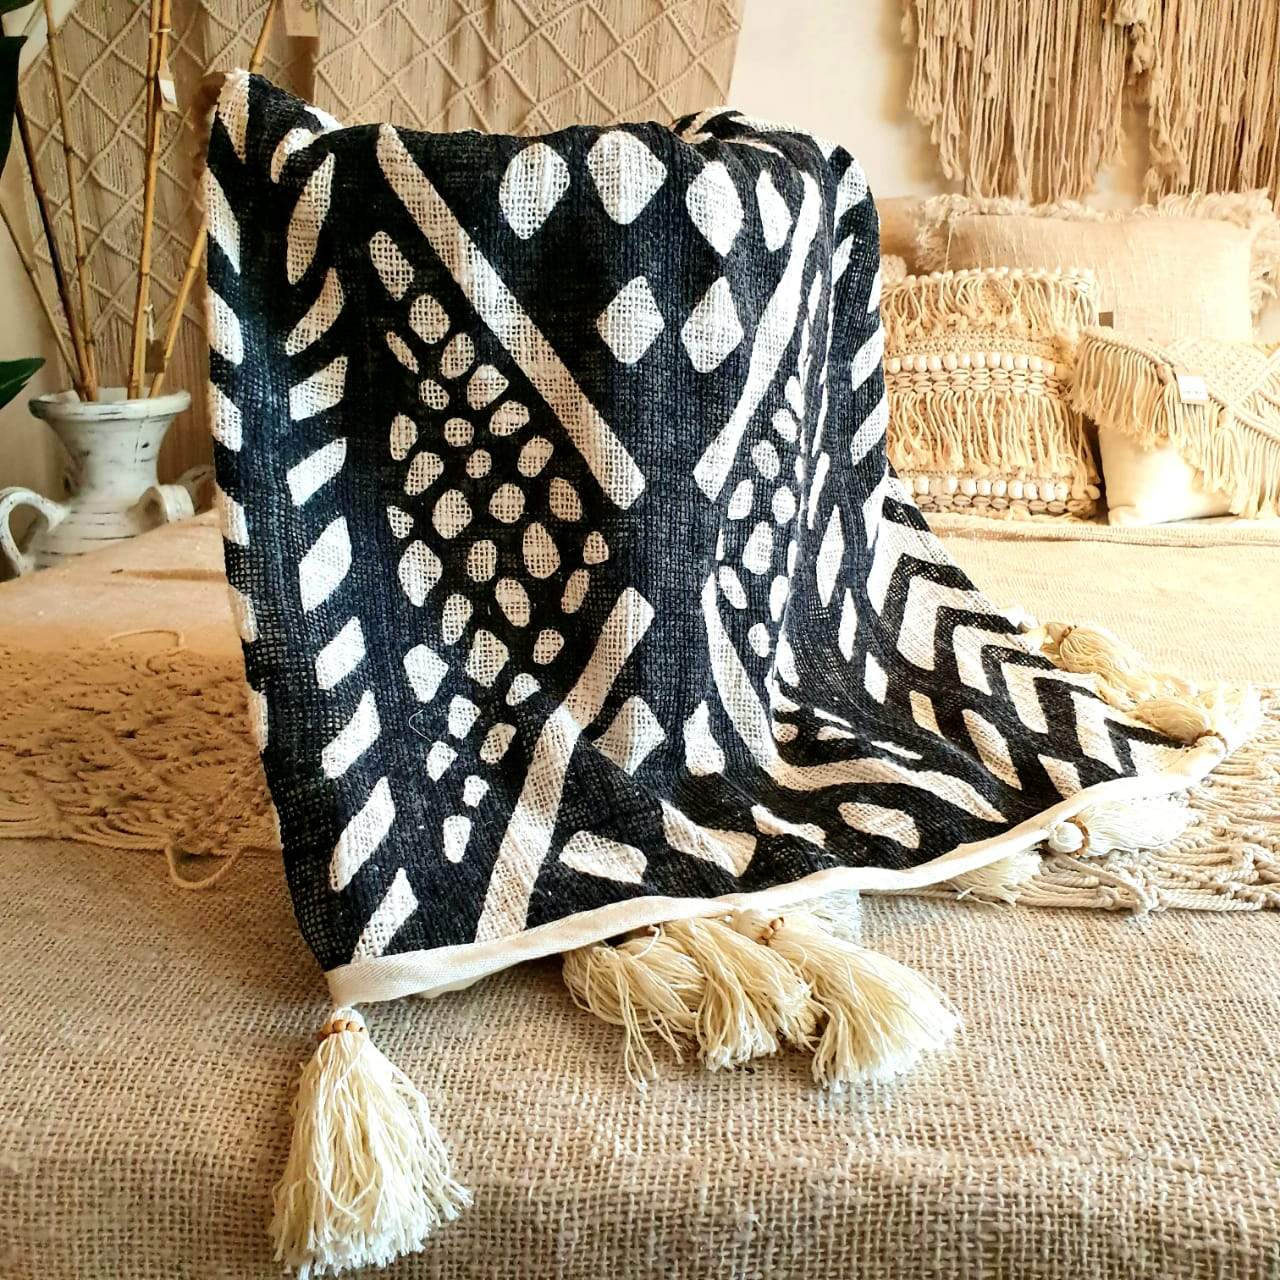 Tribal Print Throw Blanket with Beaded Tassels - bohemian-beach-house